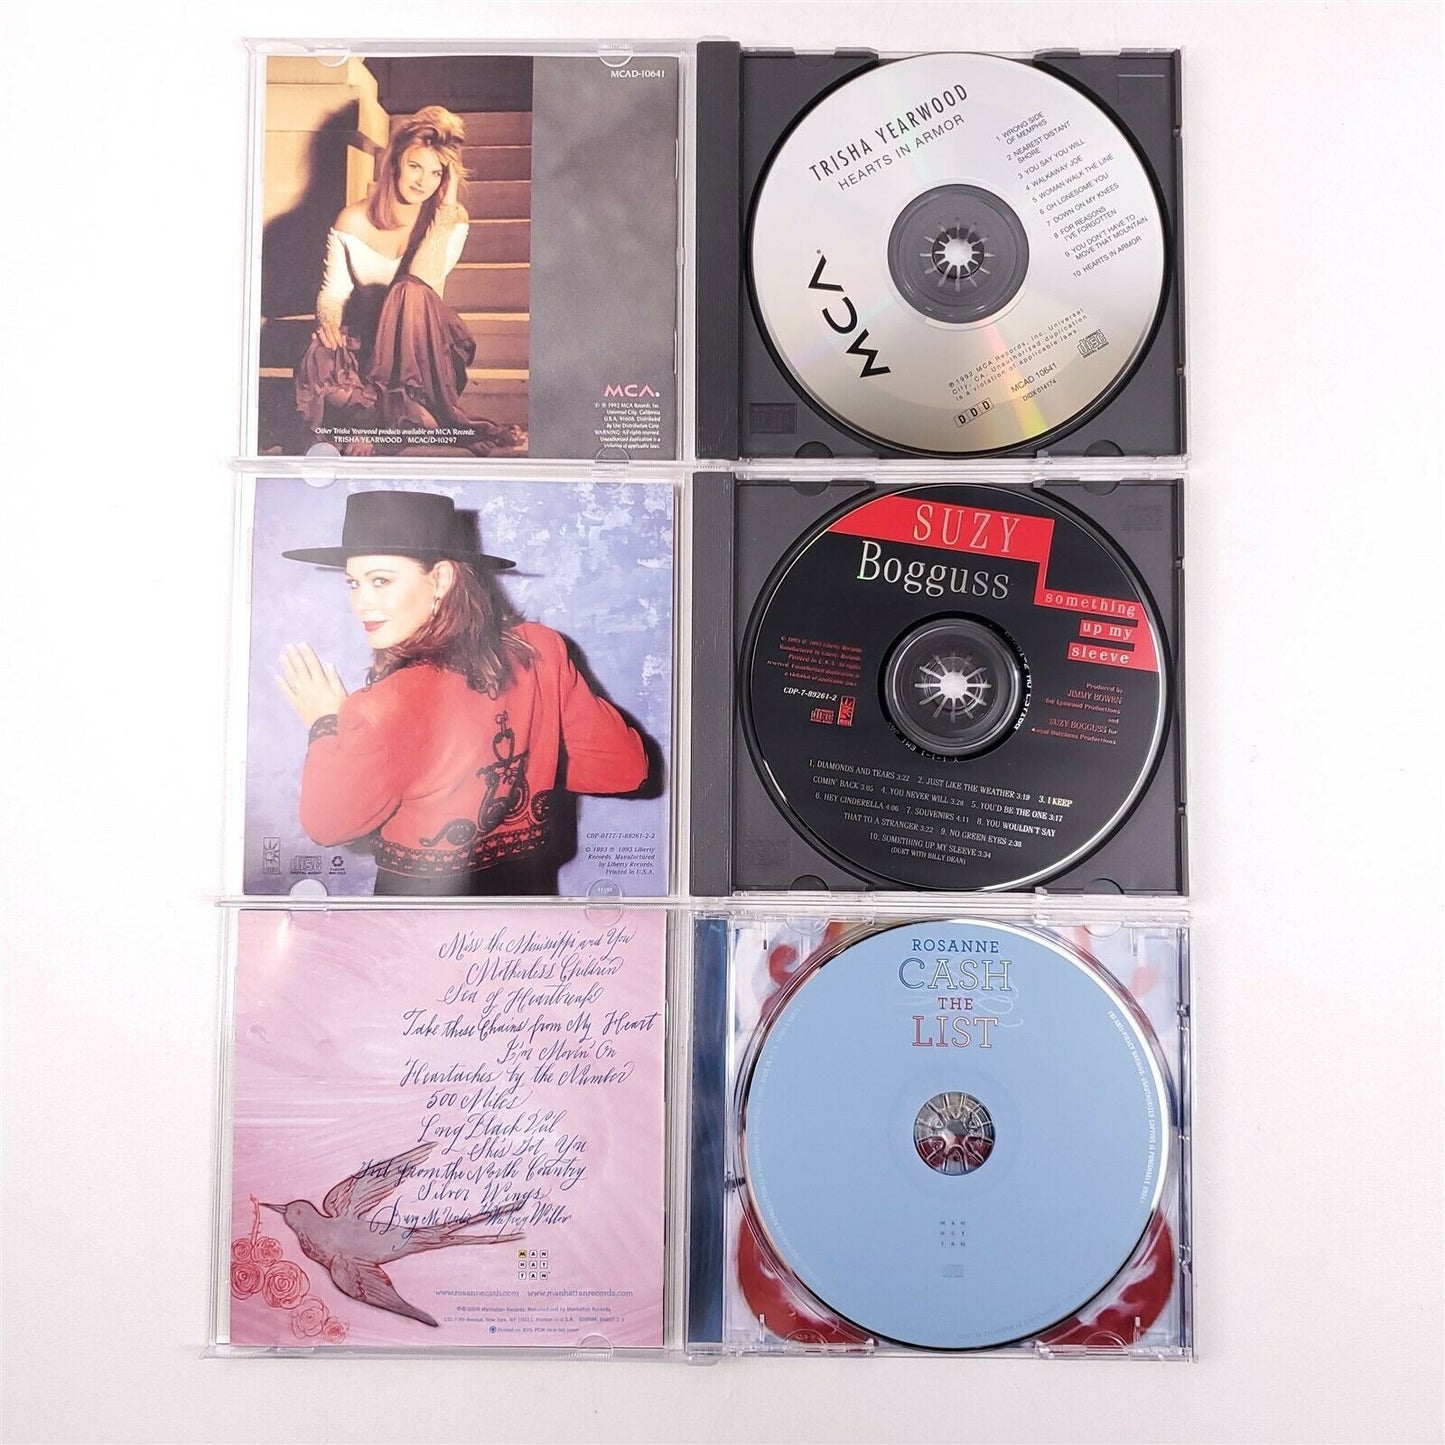 7 Female Country Artist CD's - Reba McEntire, Patsy Cline, Trisha Yearwood